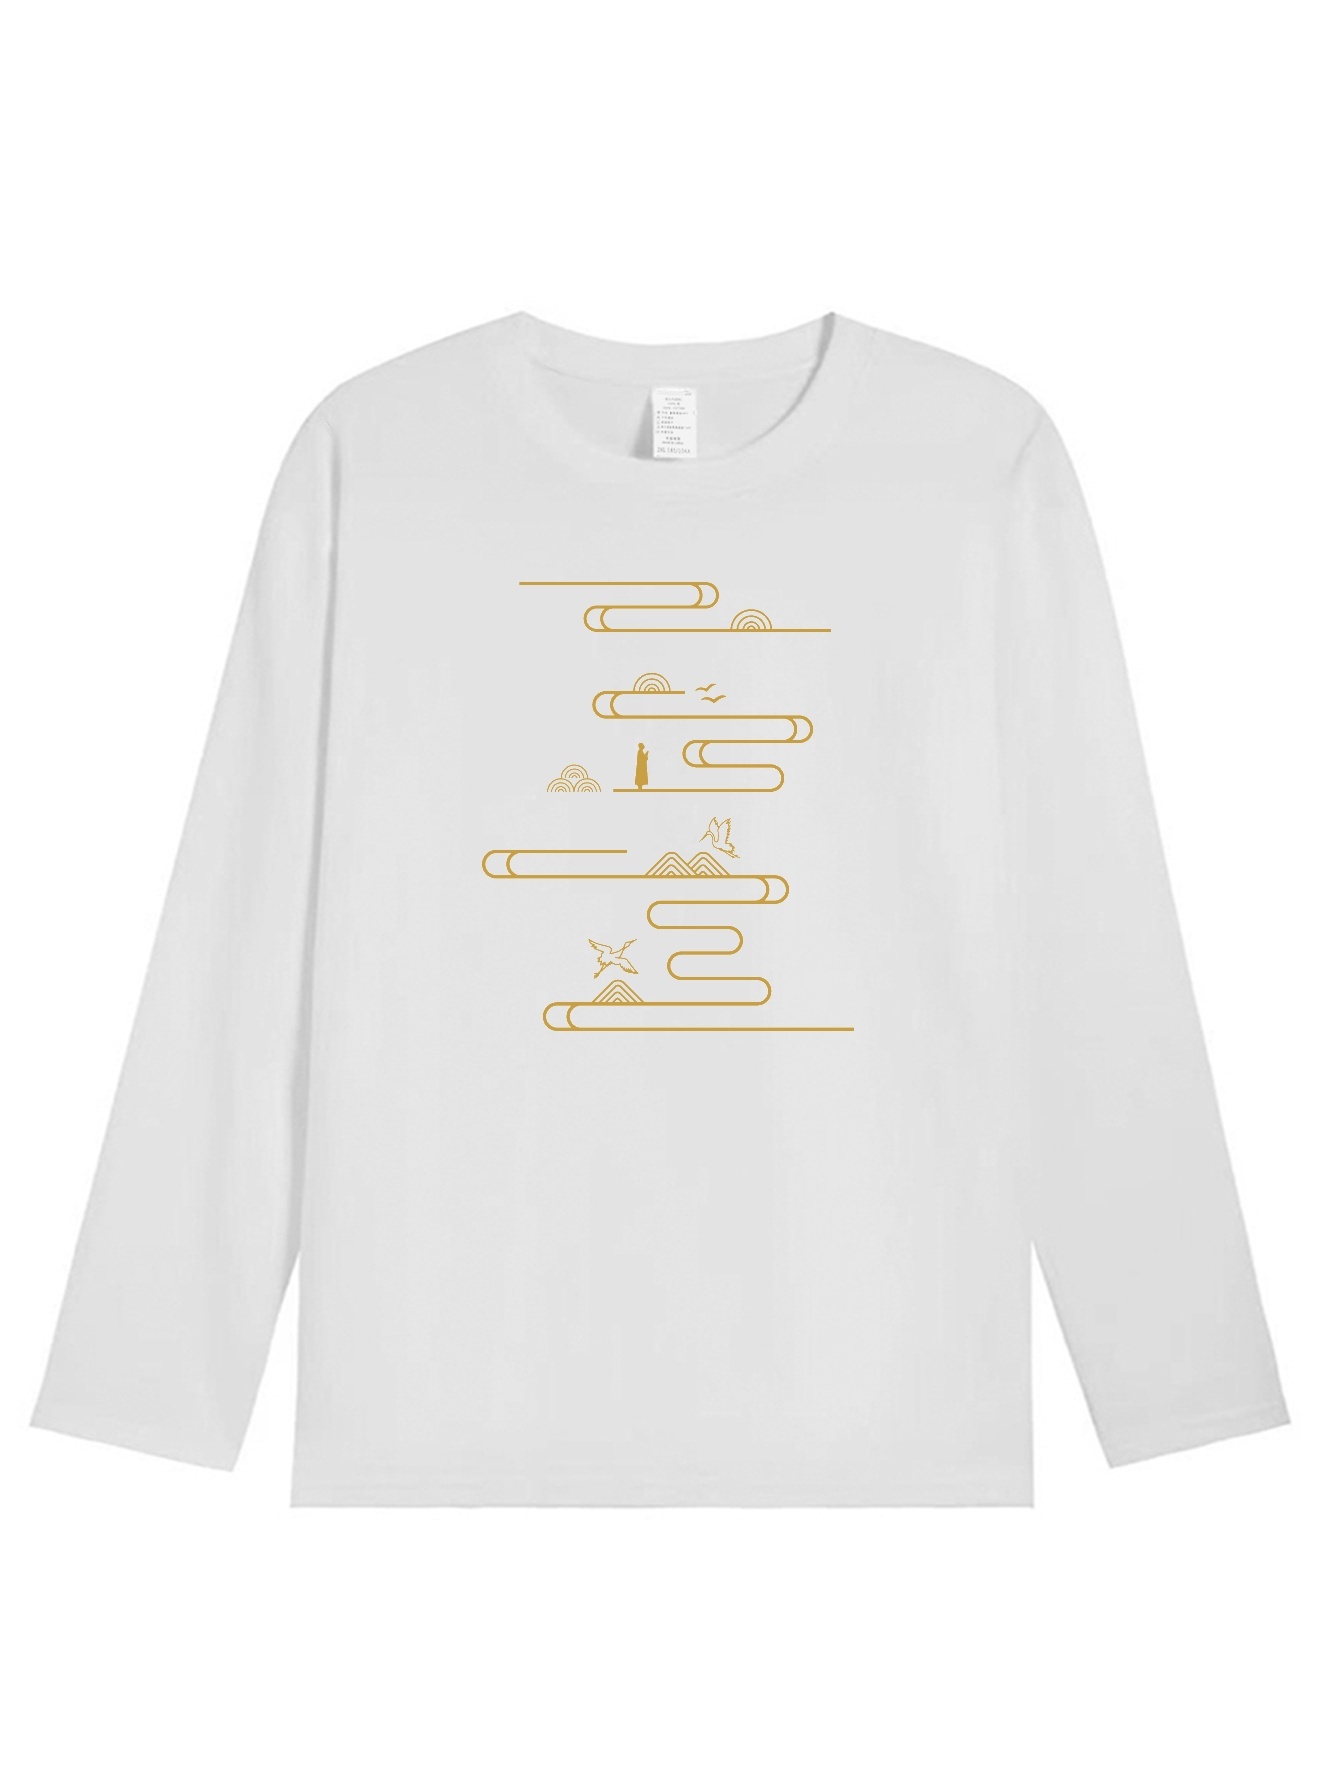 Crane Cloud & Various Print, Men's Trendy T-shirt, Casual Slightly